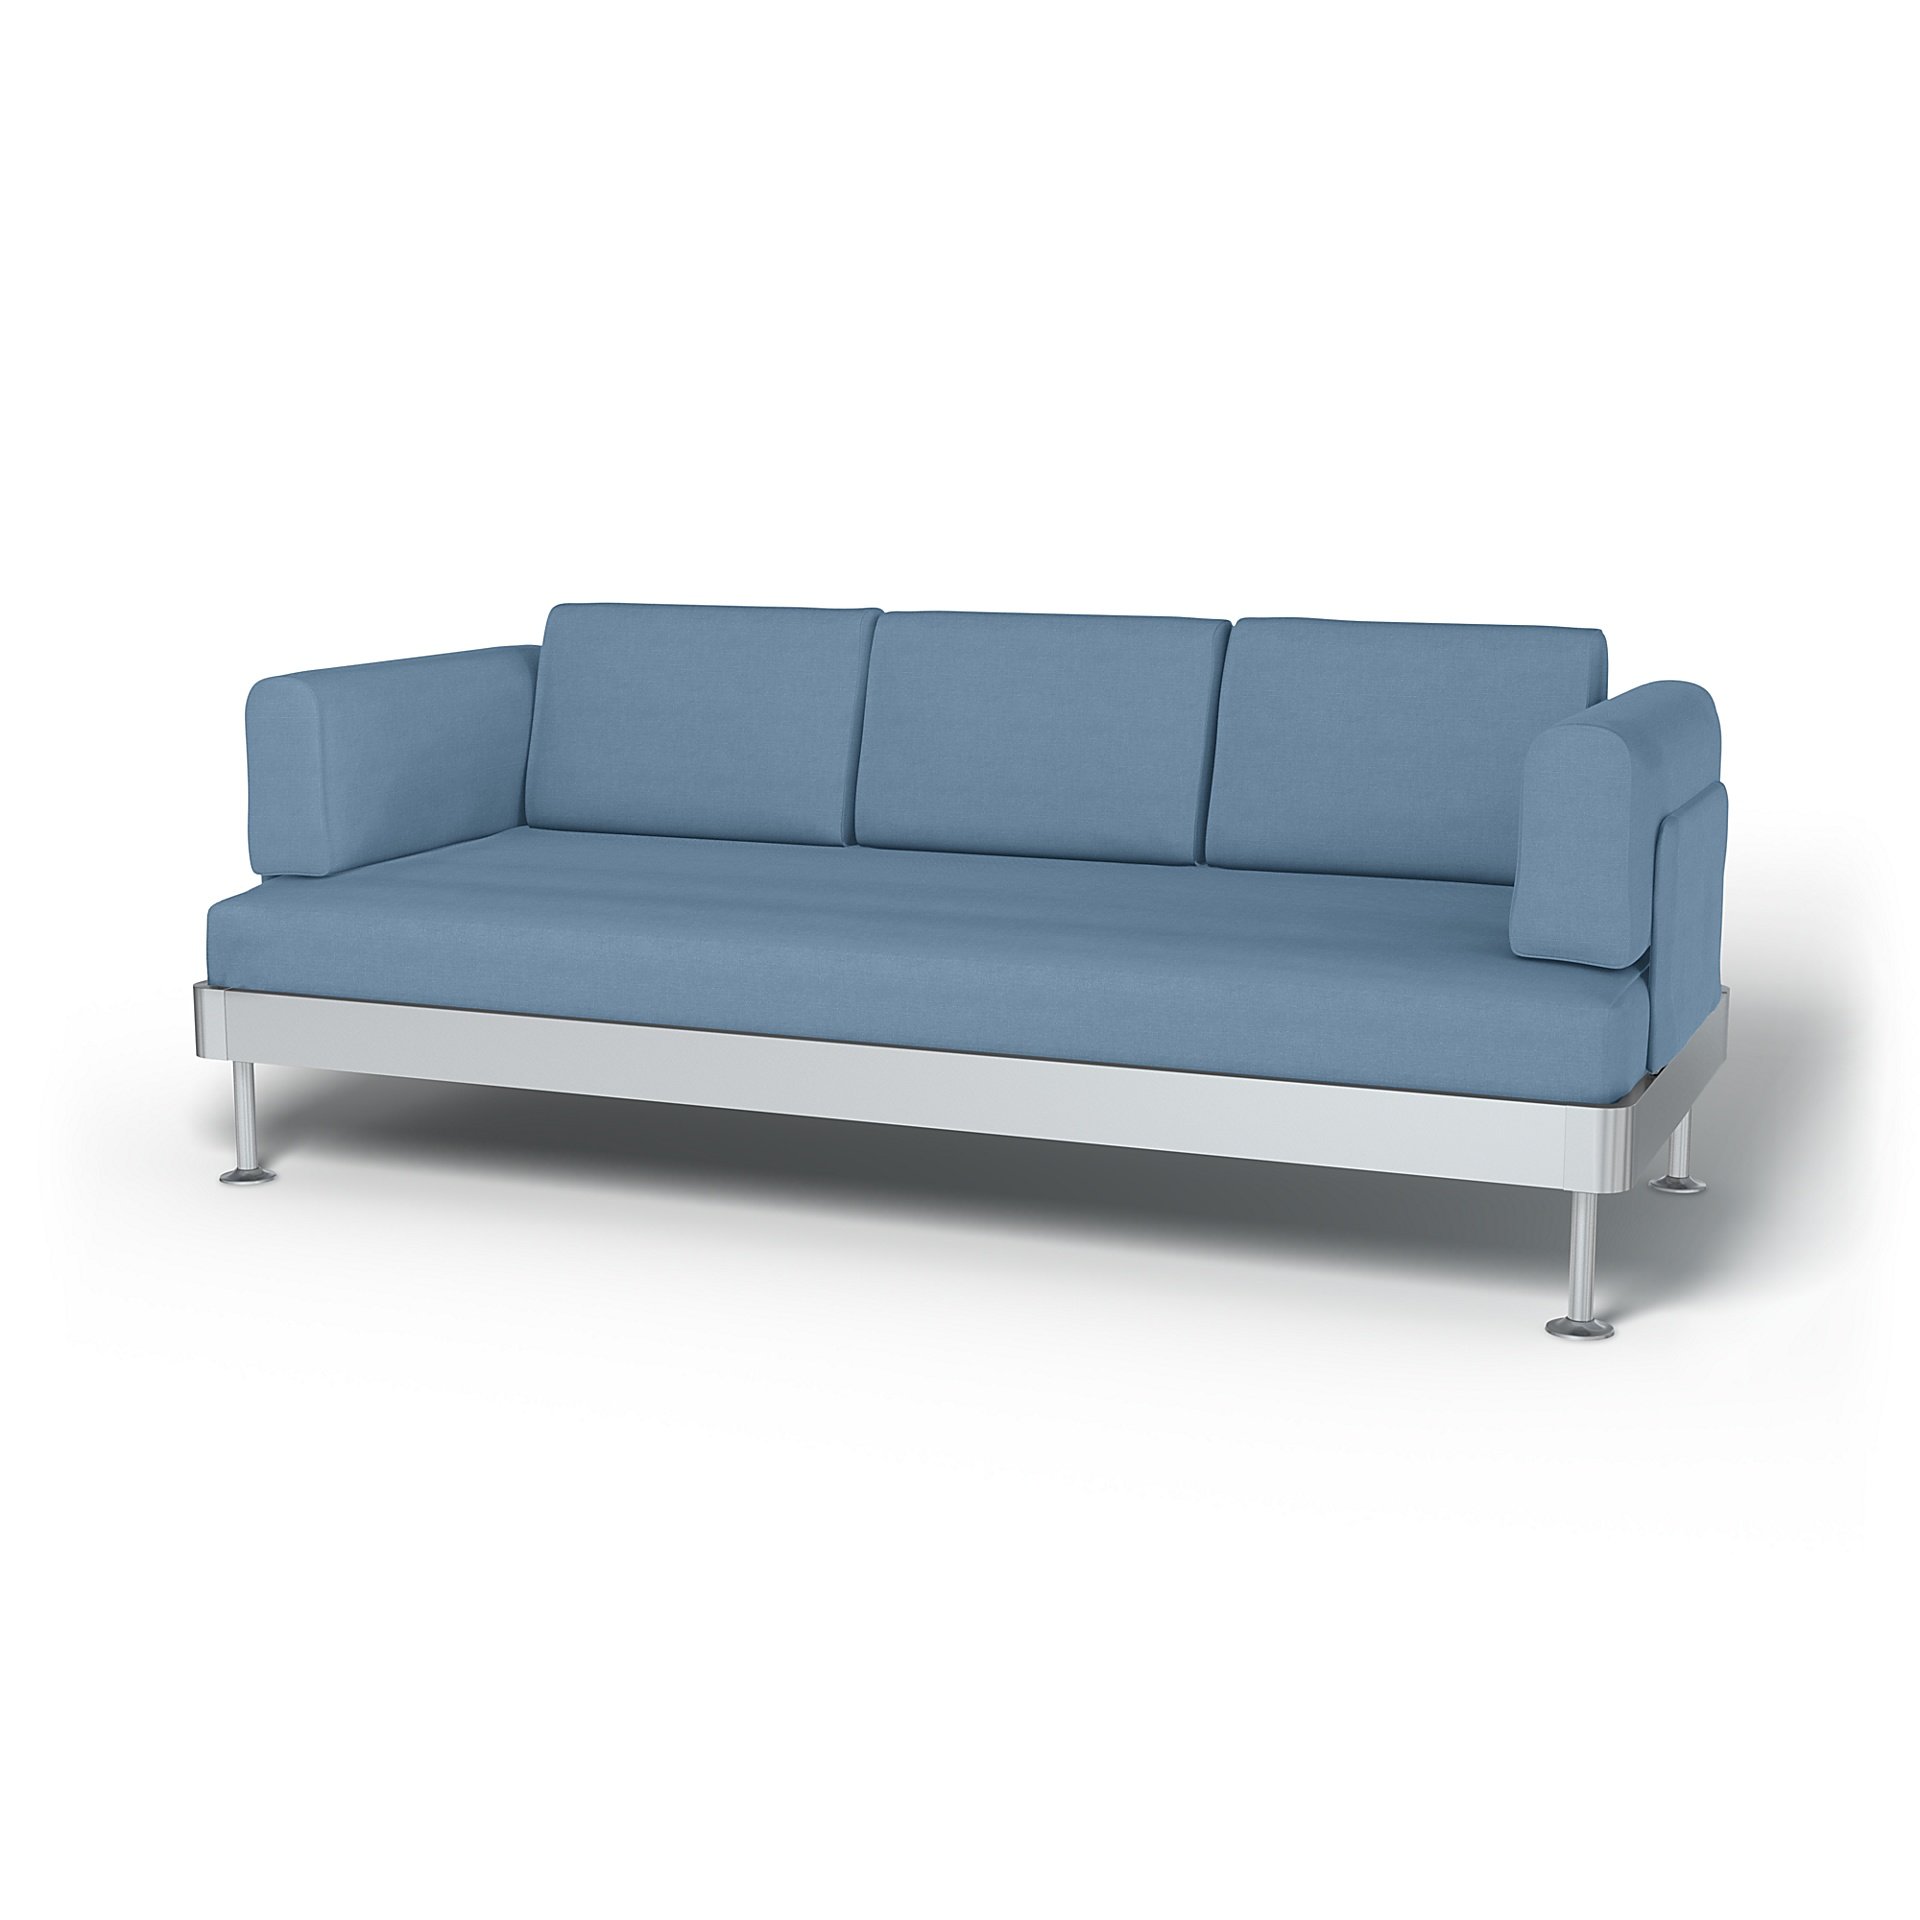 IKEA - Delaktig 3 Seater Sofa Cover, Vintage Blue, Linen - Bemz